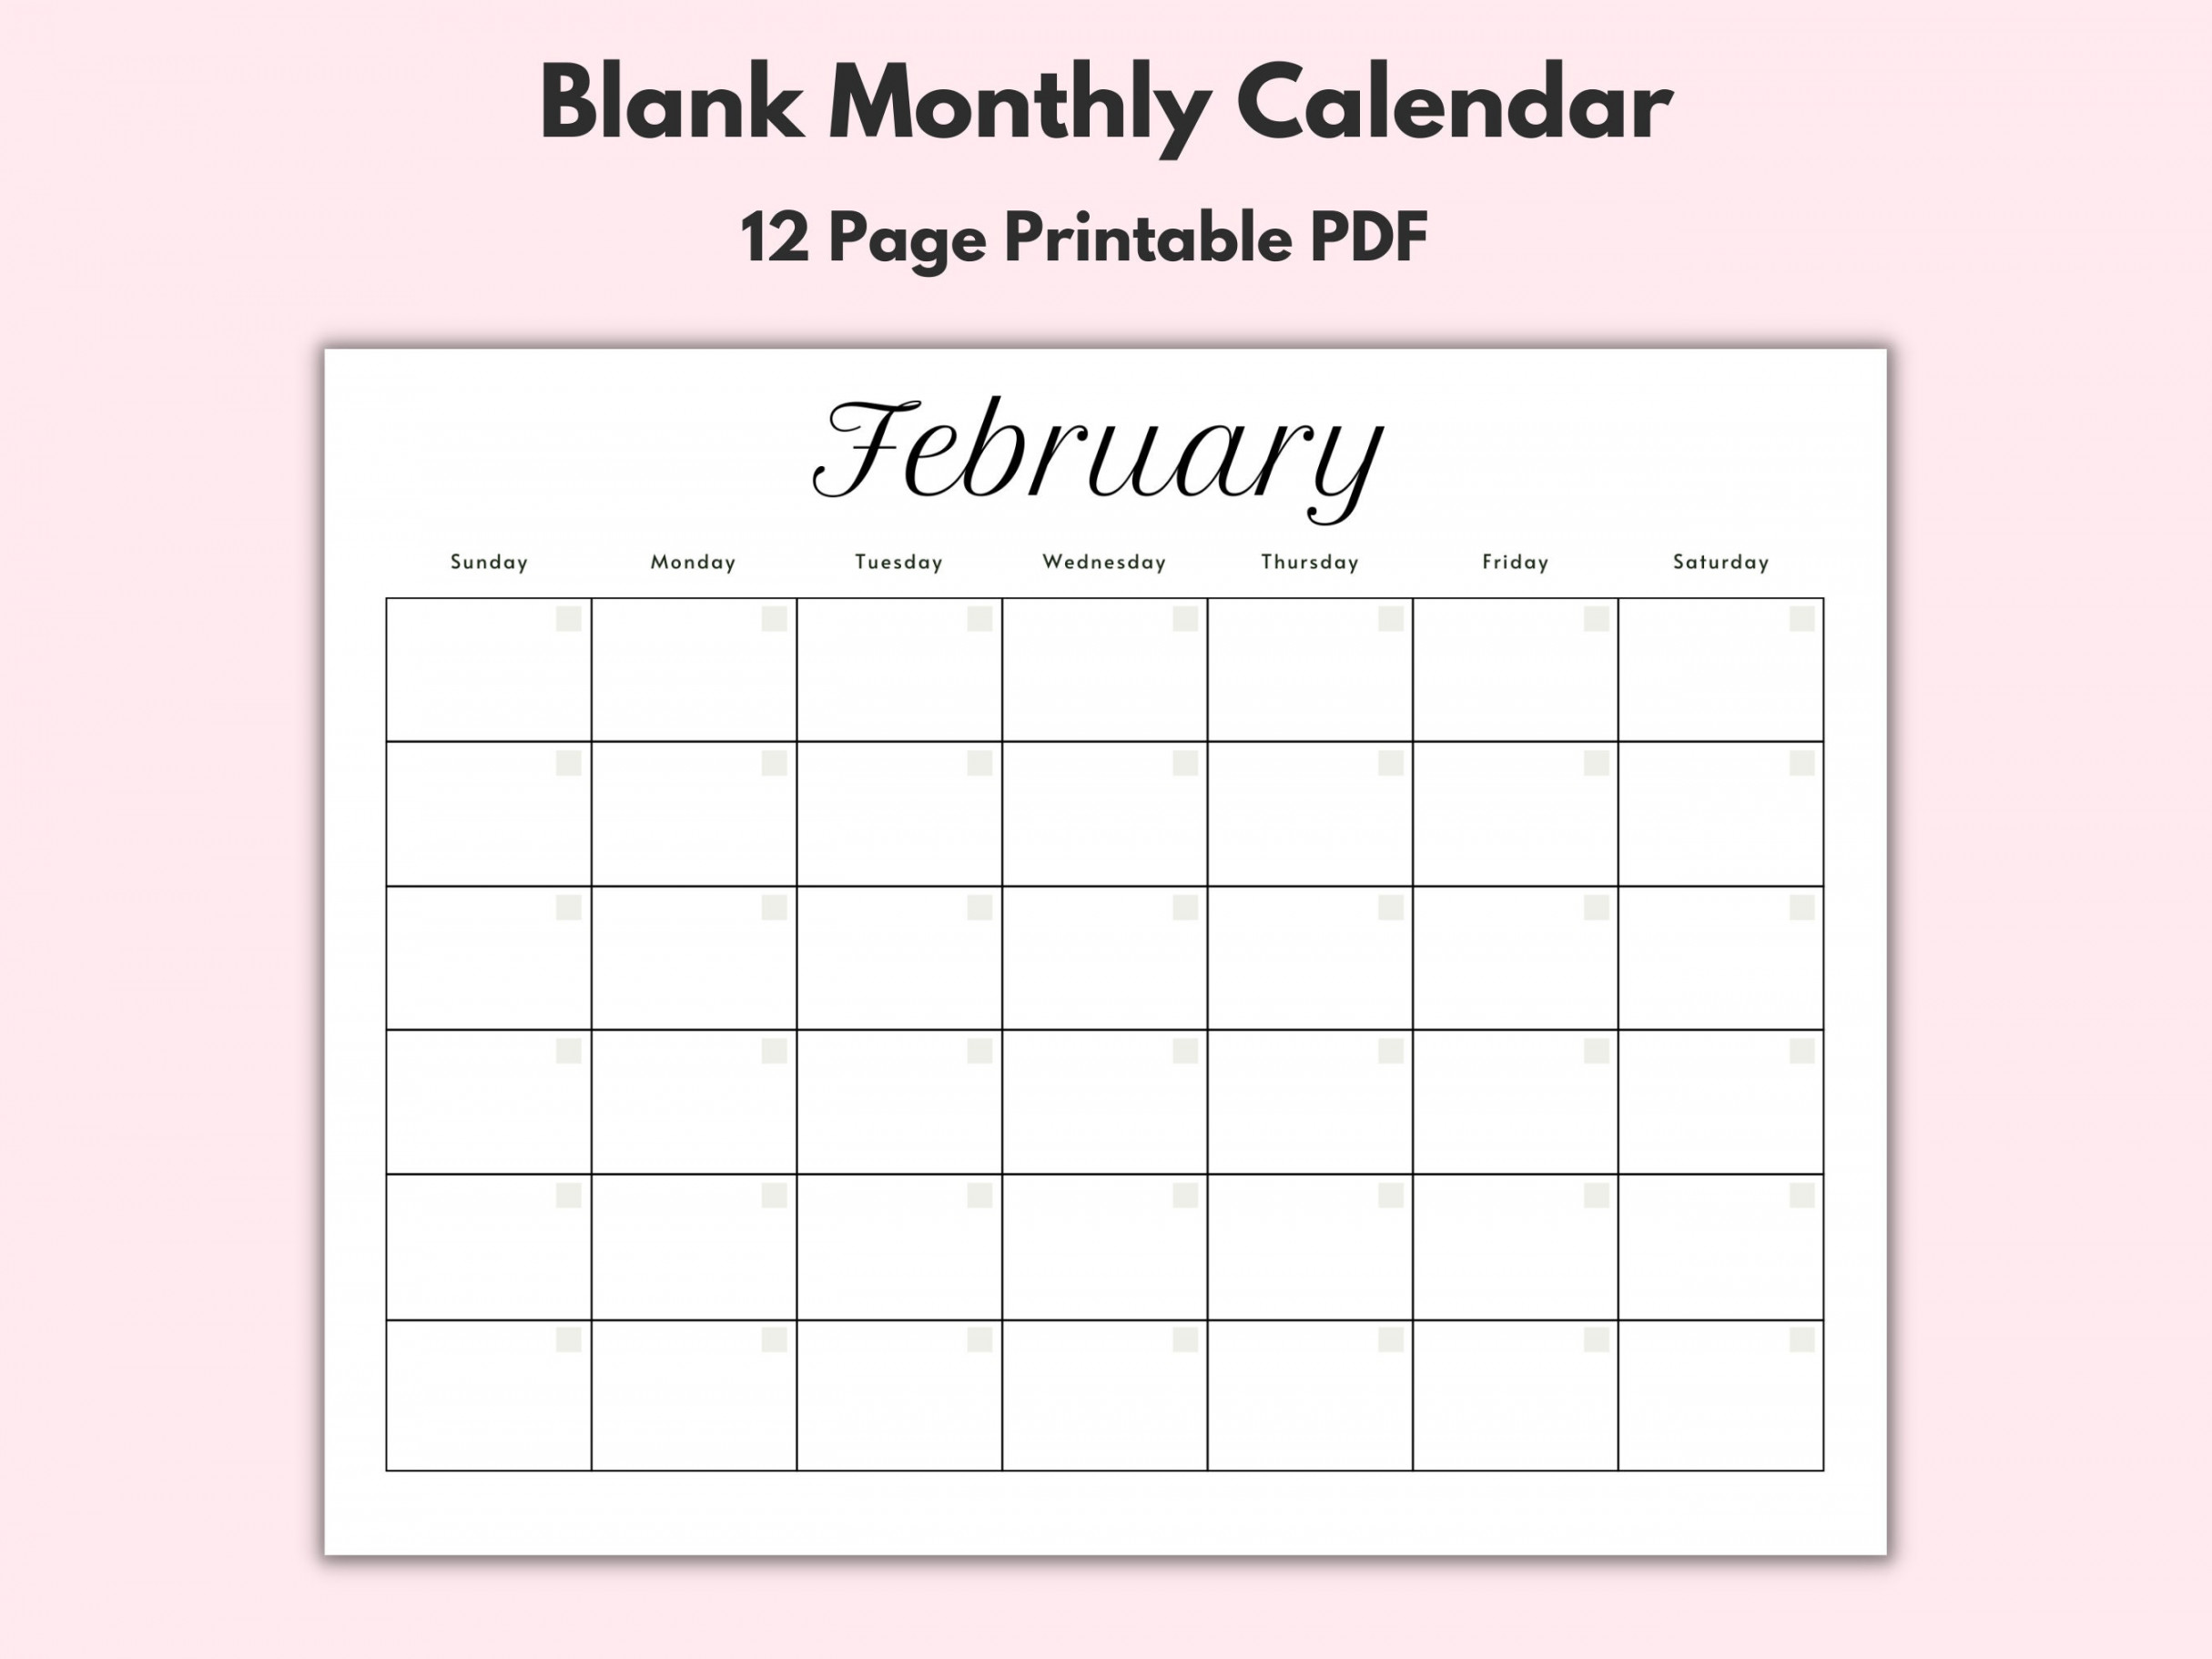 Monthly Blank Calendar Printable Calendar Template - Etsy